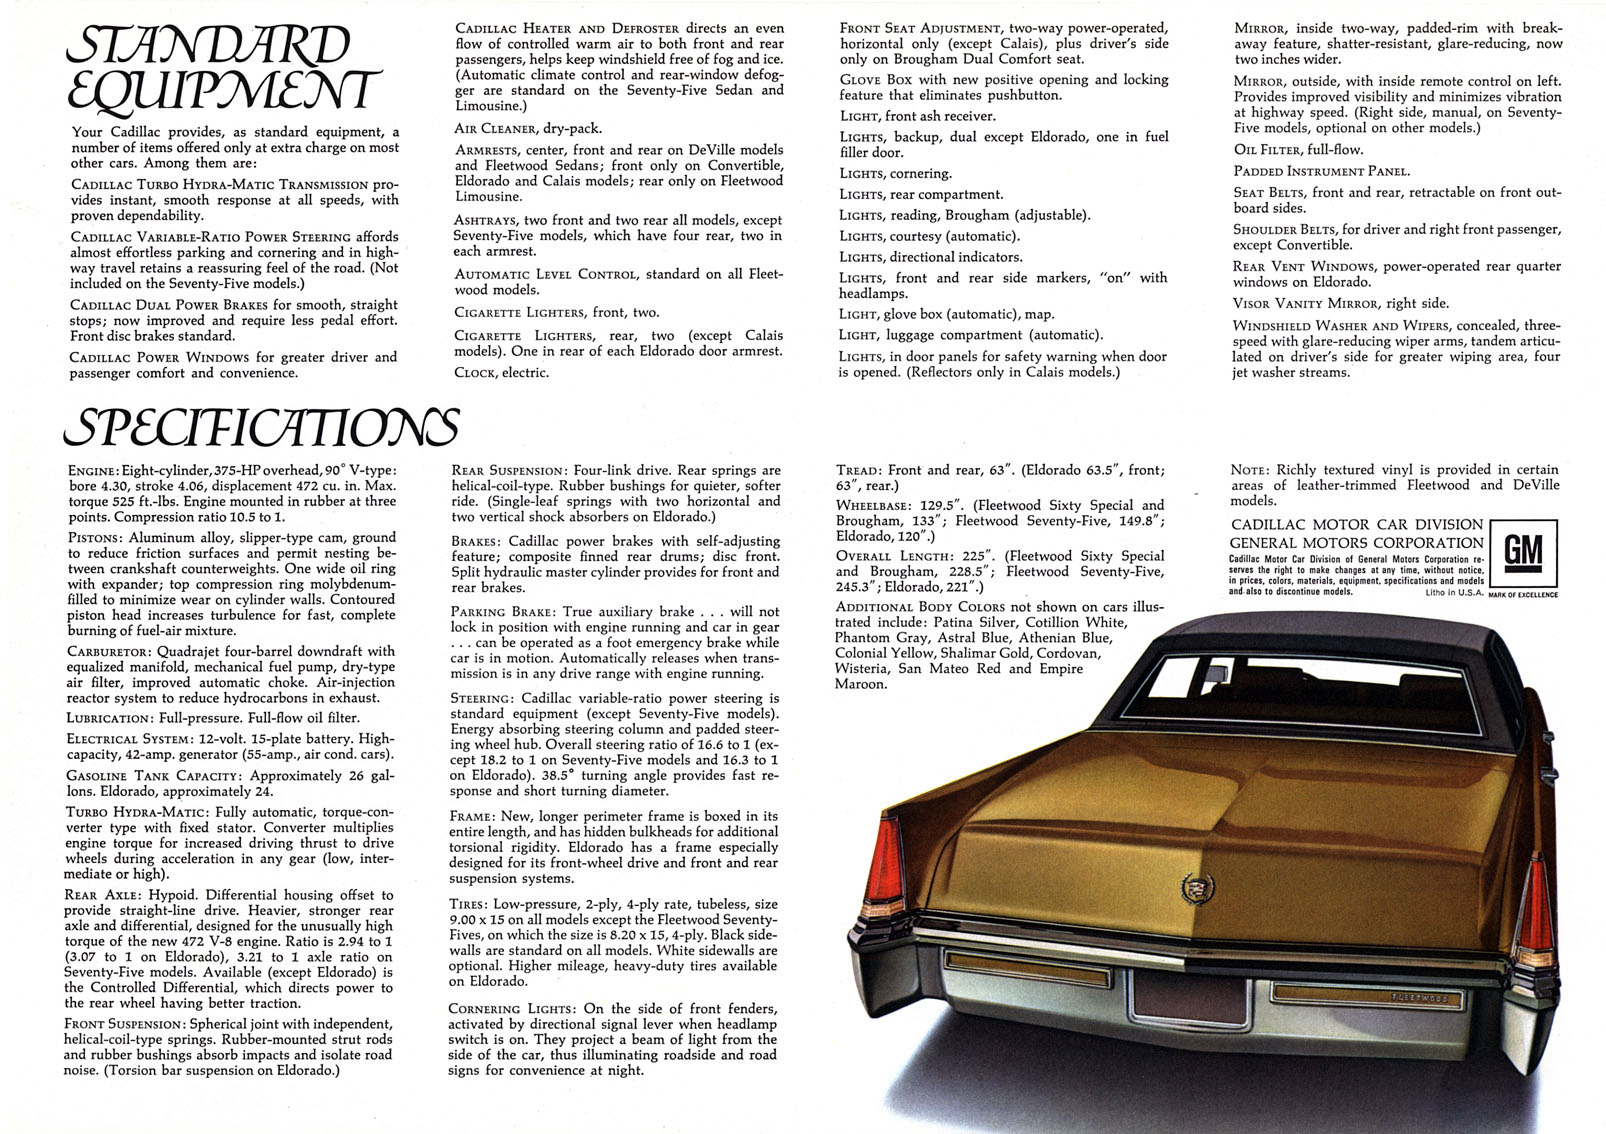 1969_Cadillac_Prestige-26